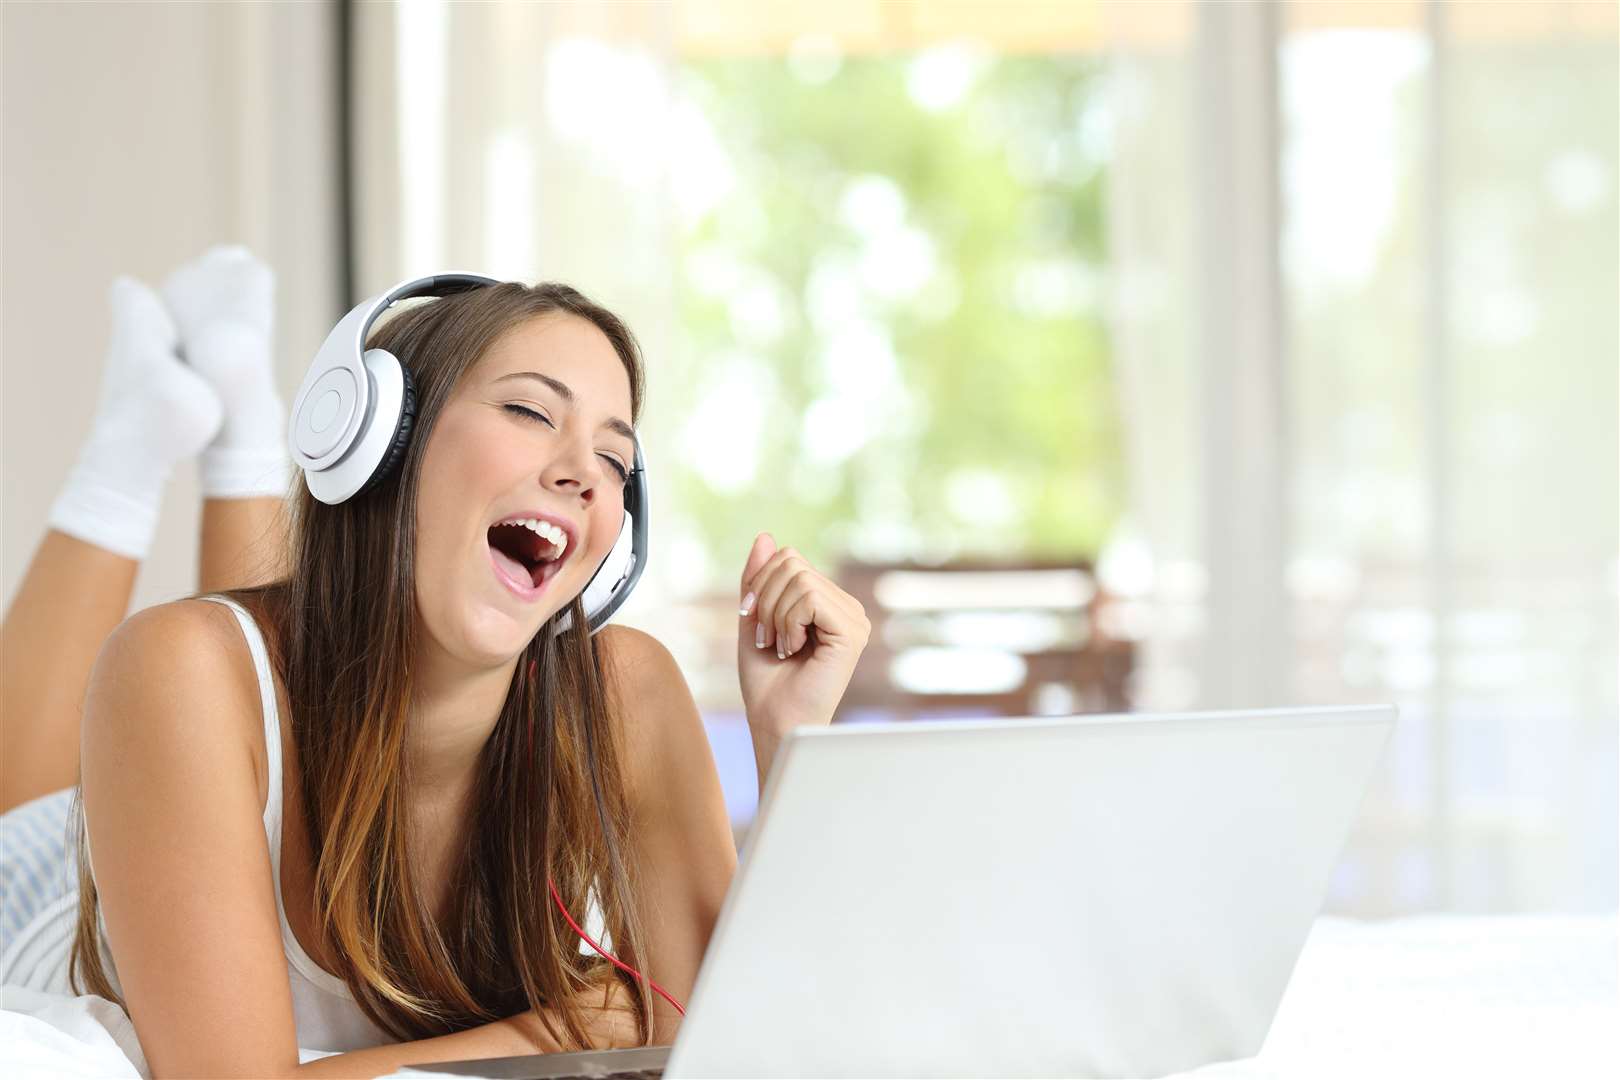 Girl with headphones singing listening music on laptop